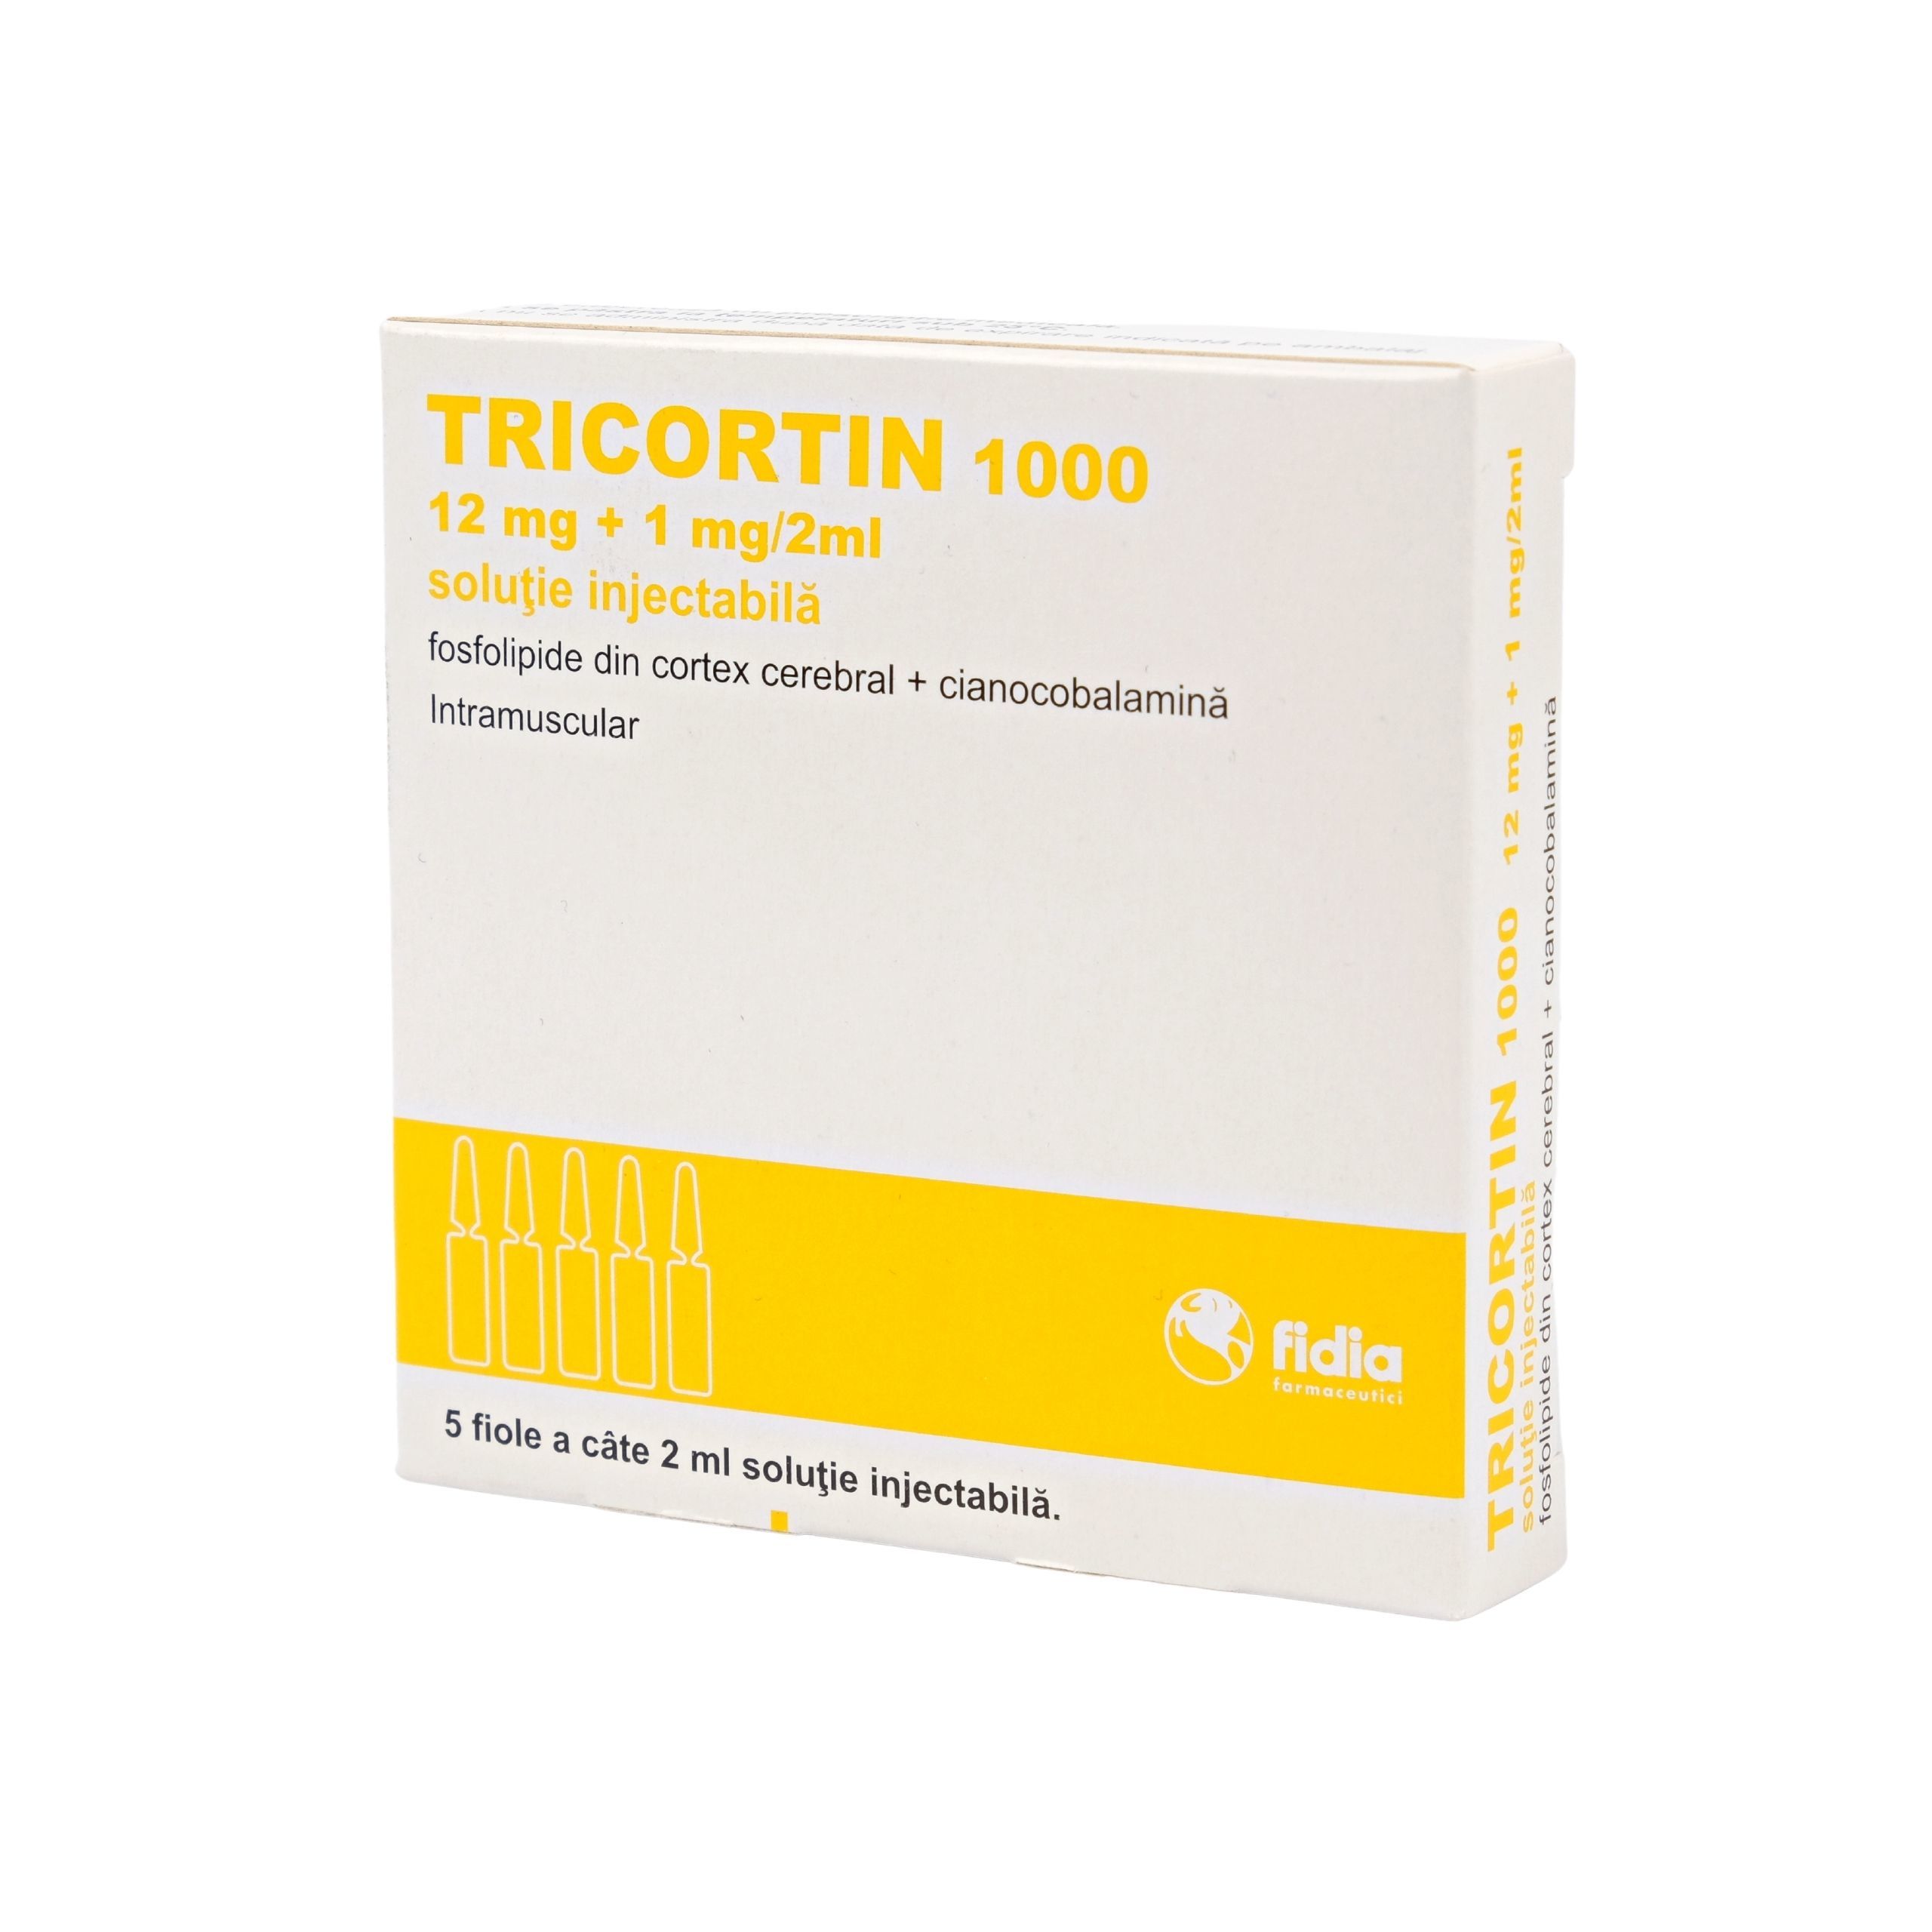 Трикортин инструкция. Нейробиол 2 мл. Drostop 2ml. Retorin 2ml. Метакартин 5/5.